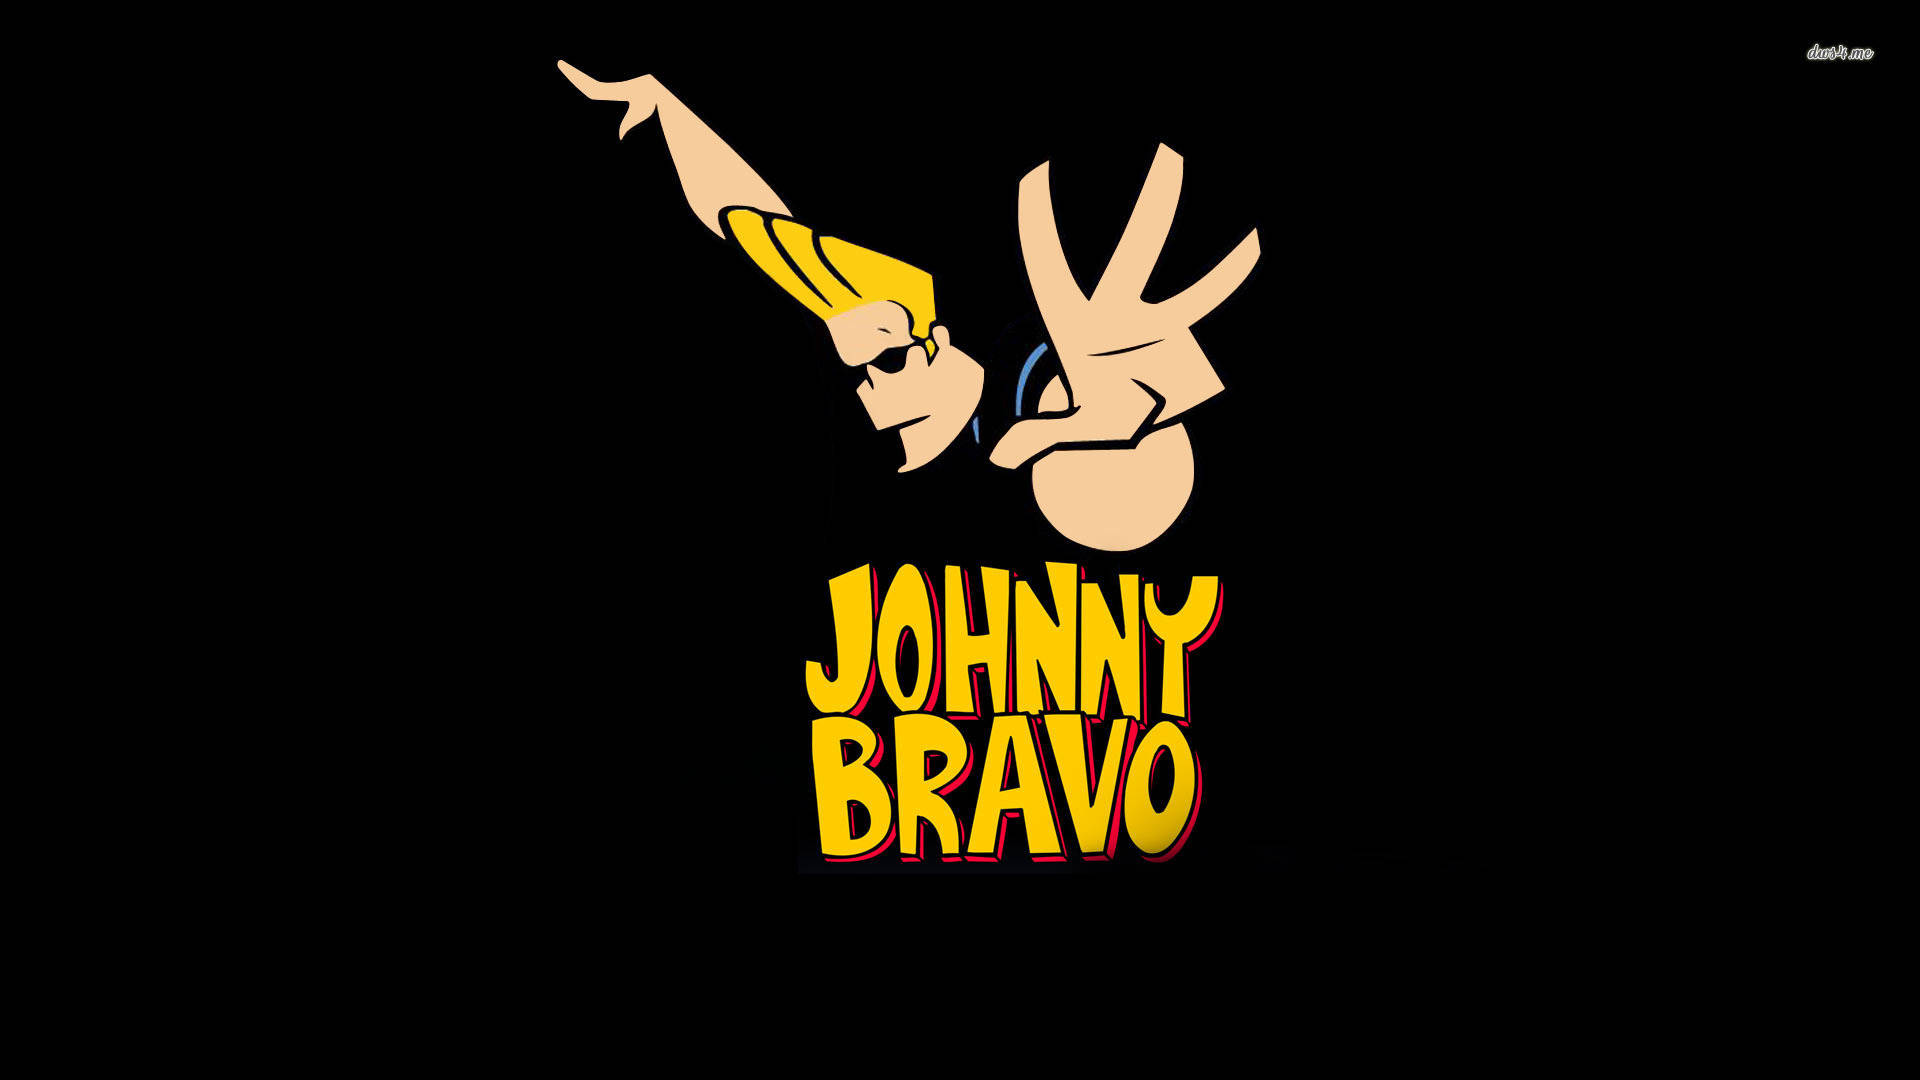 Stylish Johnny Bravo Posing With Sunglasses Wallpaper